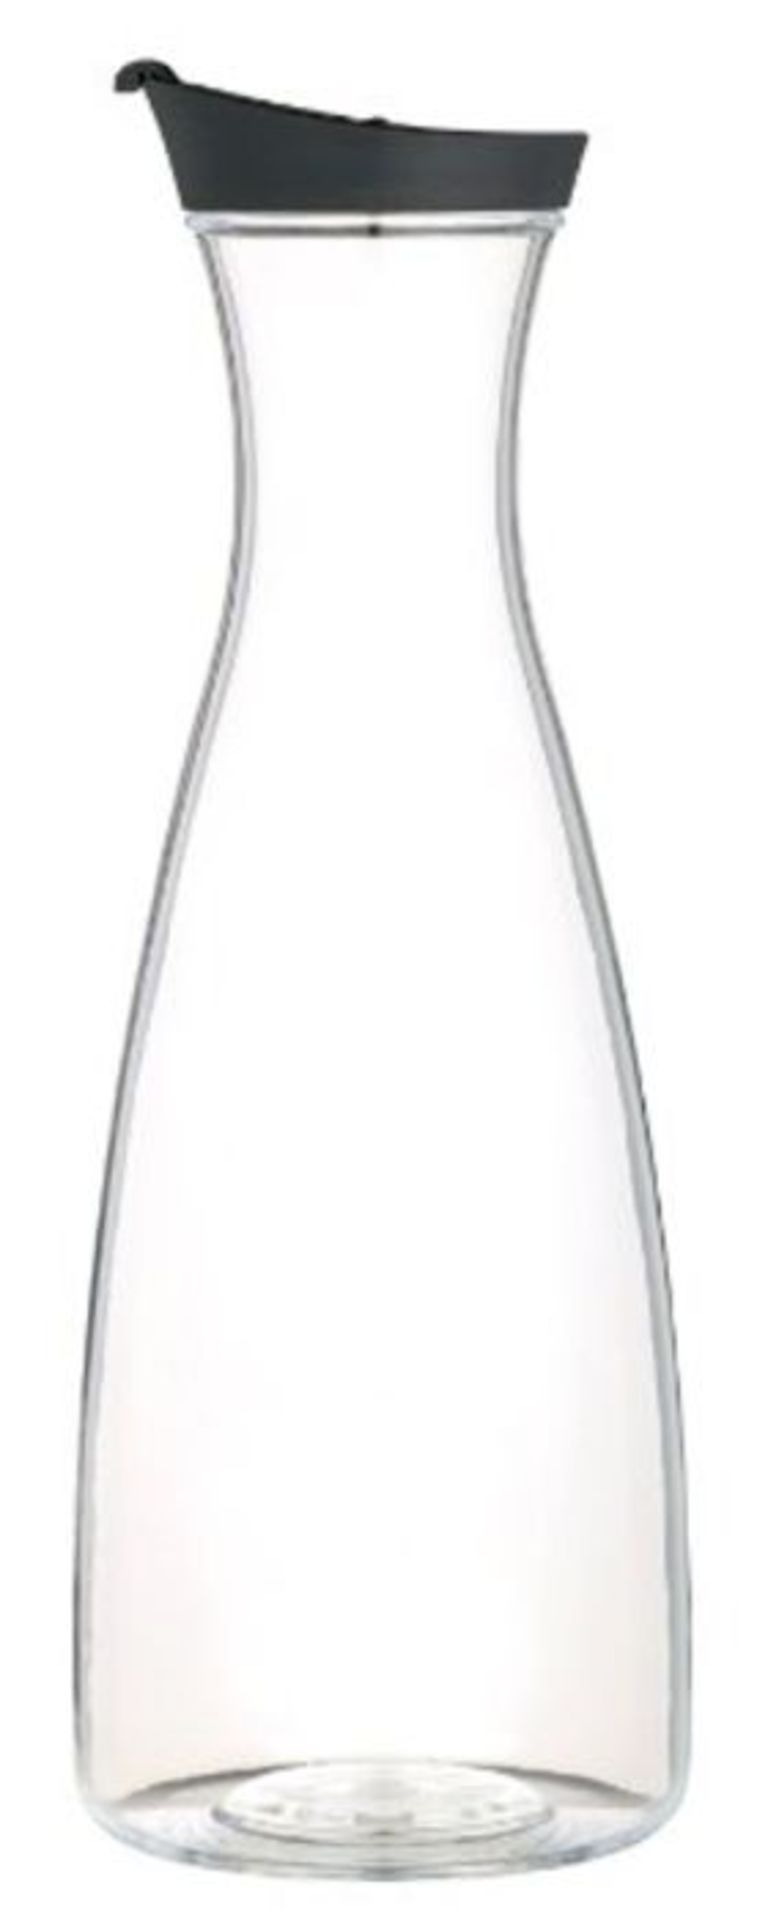 KitchenCraft JUICEJAR Plastic Water Jug with Lid, Transparent, 1.7 Litre - Image 3 of 4